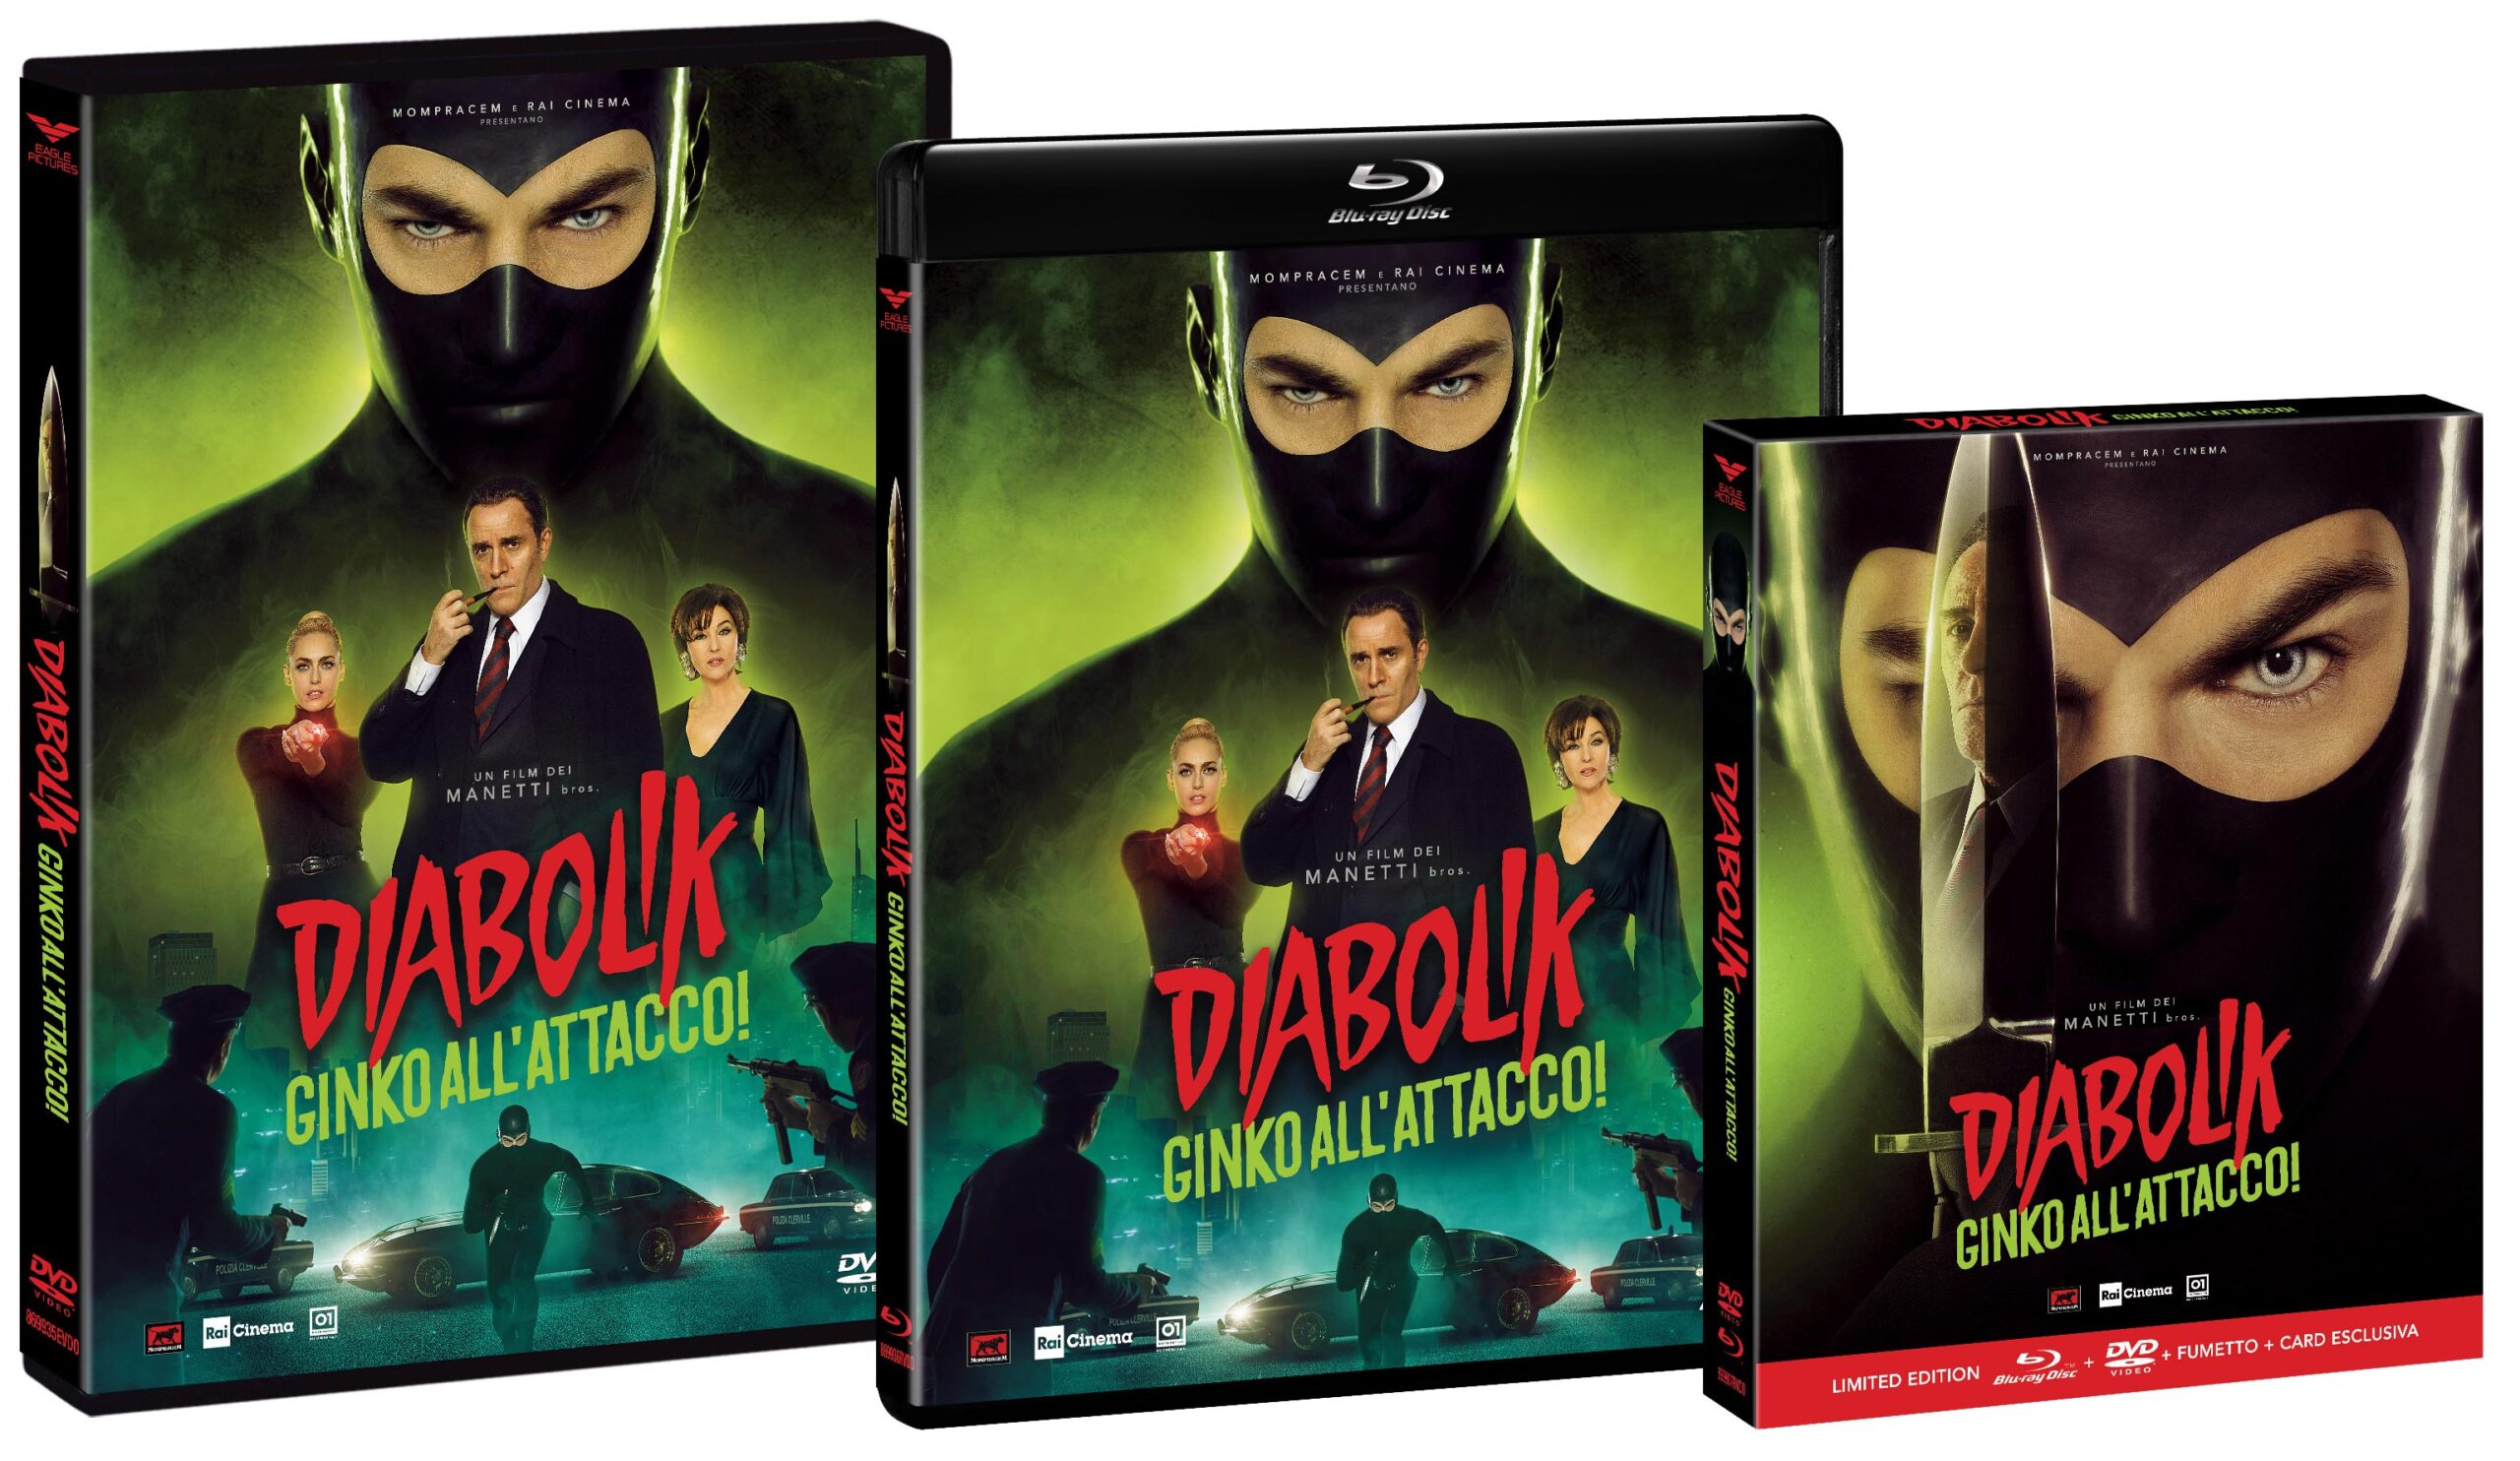 Diabolik - Ginko All'attacco in DVD, Blu-ray 